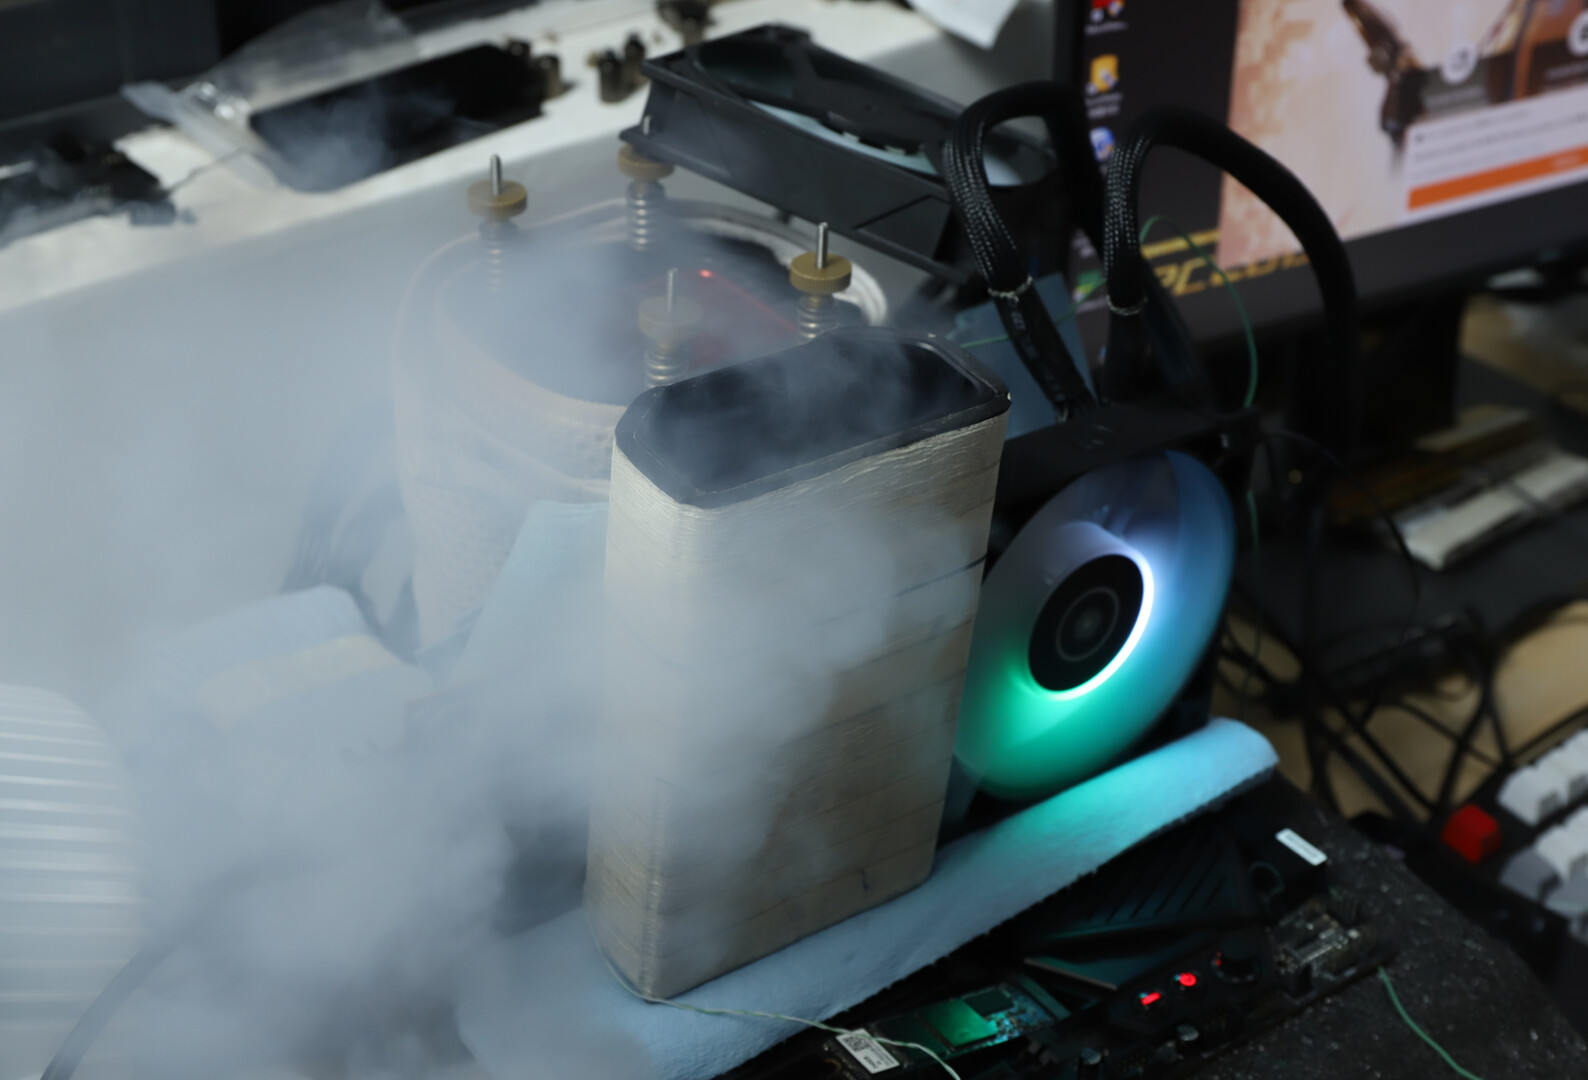 lnirbnbuspvrhiuh การ์ดจอ AMD Radeon RX 6800 XT ถูกโอเวอร์คล๊อกไปที่ความเร็ว 2.80 GHz โดยใช้ไนโตรเจนเหลว LN2 สร้างสถิติใหม่ 3DMark Fire Strike ที่แรงที่สุดในโลก